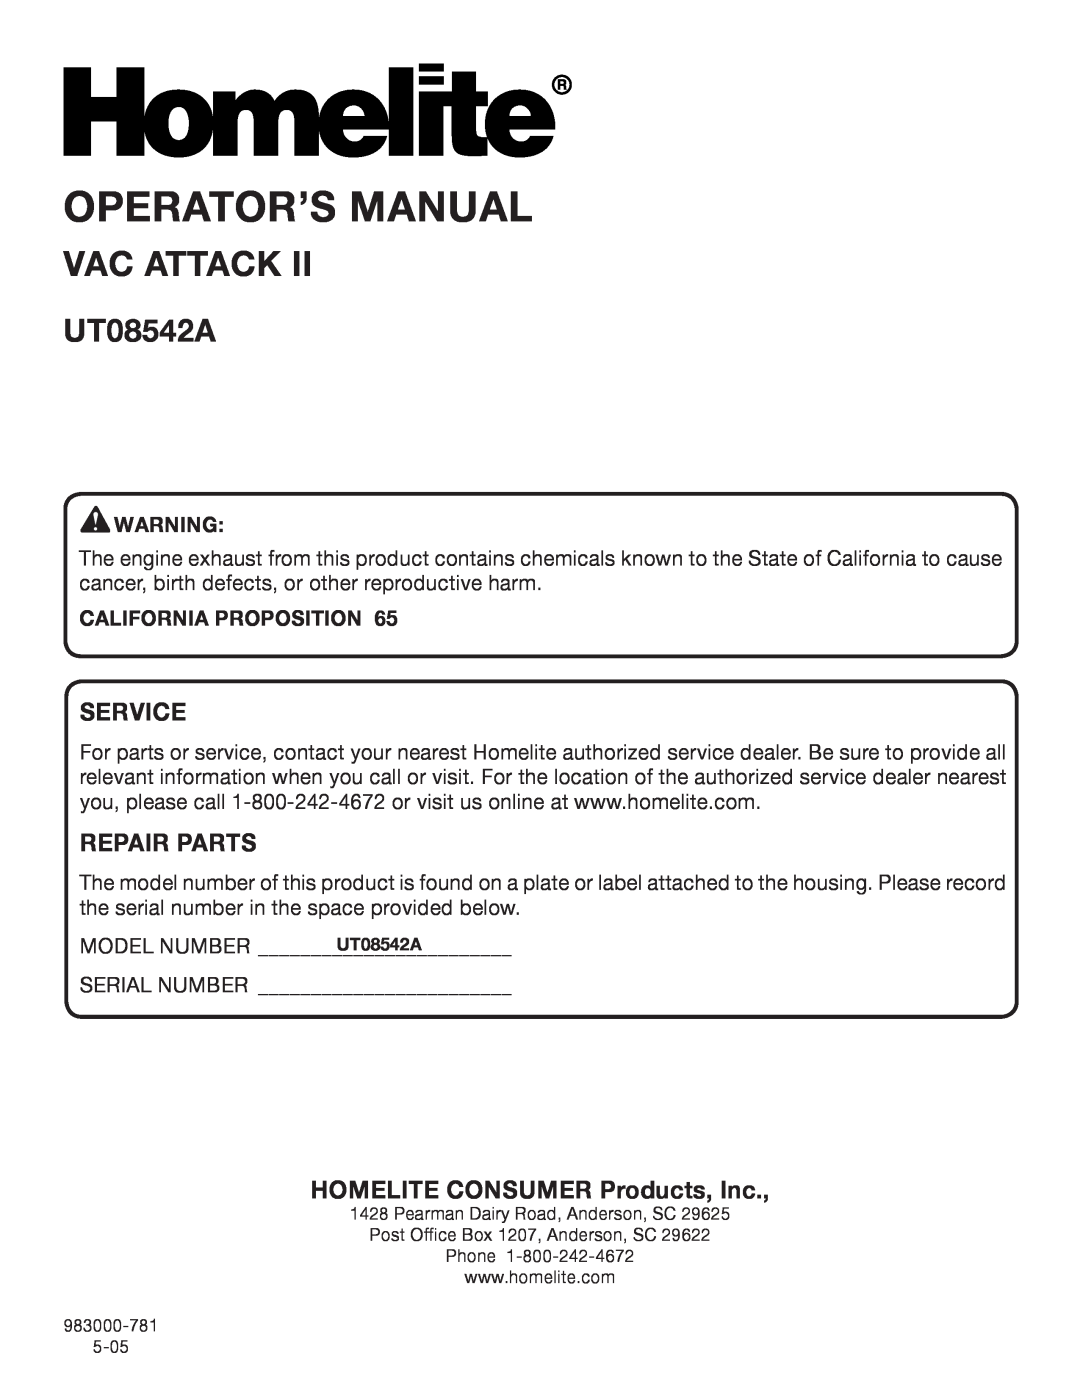 Homelite UT08542A manual Operator’S Manual, Vac Attack, Service, Repair Parts, HOMELITE CONSUMER Products, Inc 